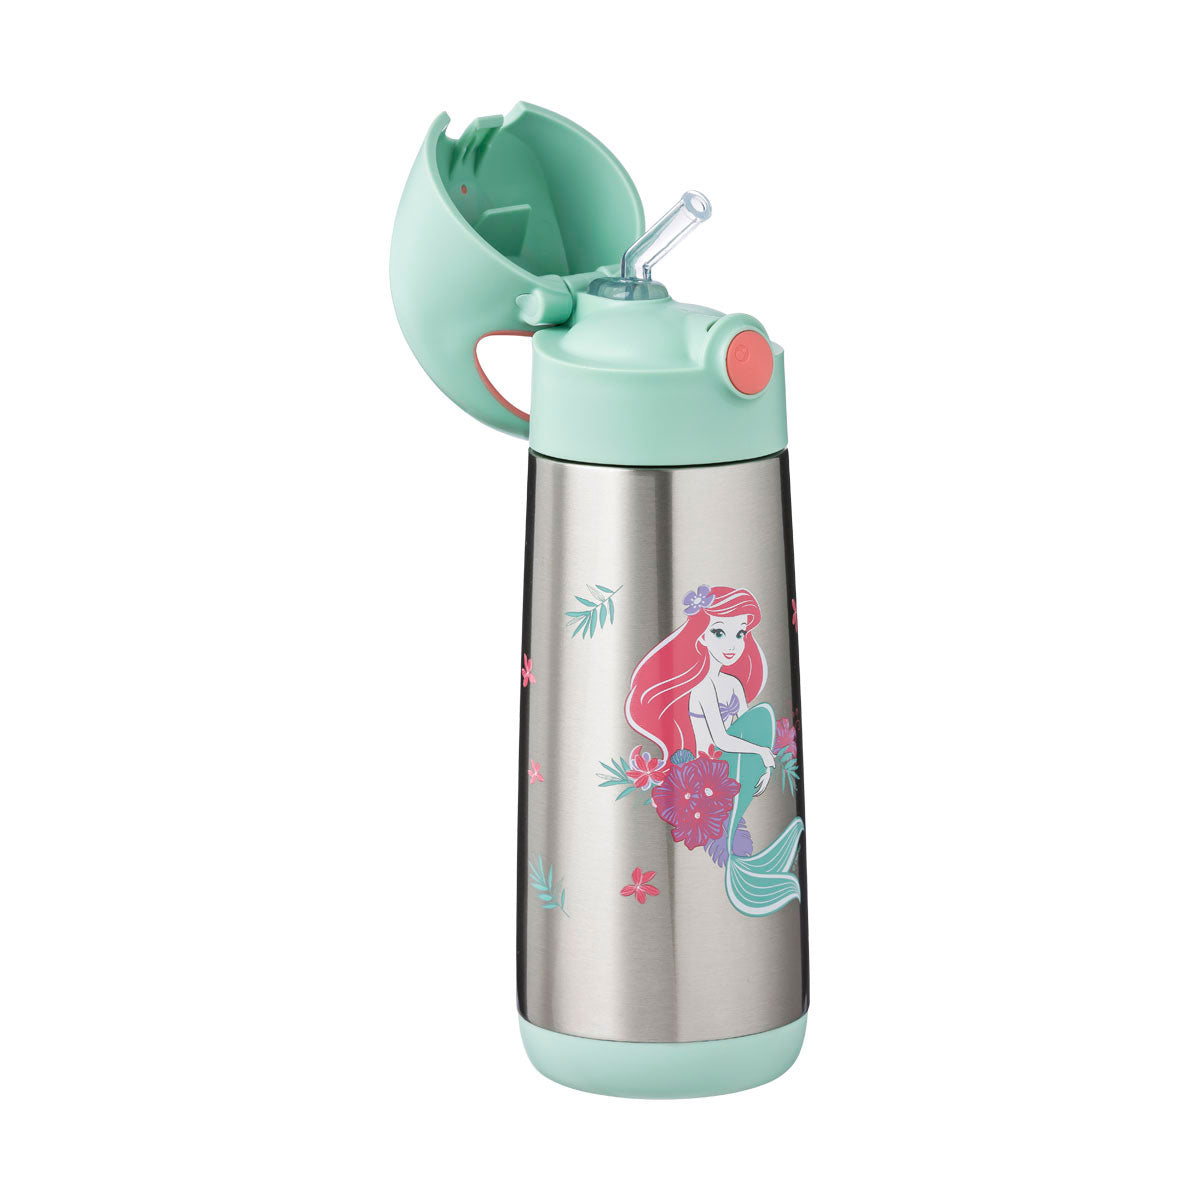 b.box 500ml Insulated Drink Bottle - The Little Mermaid